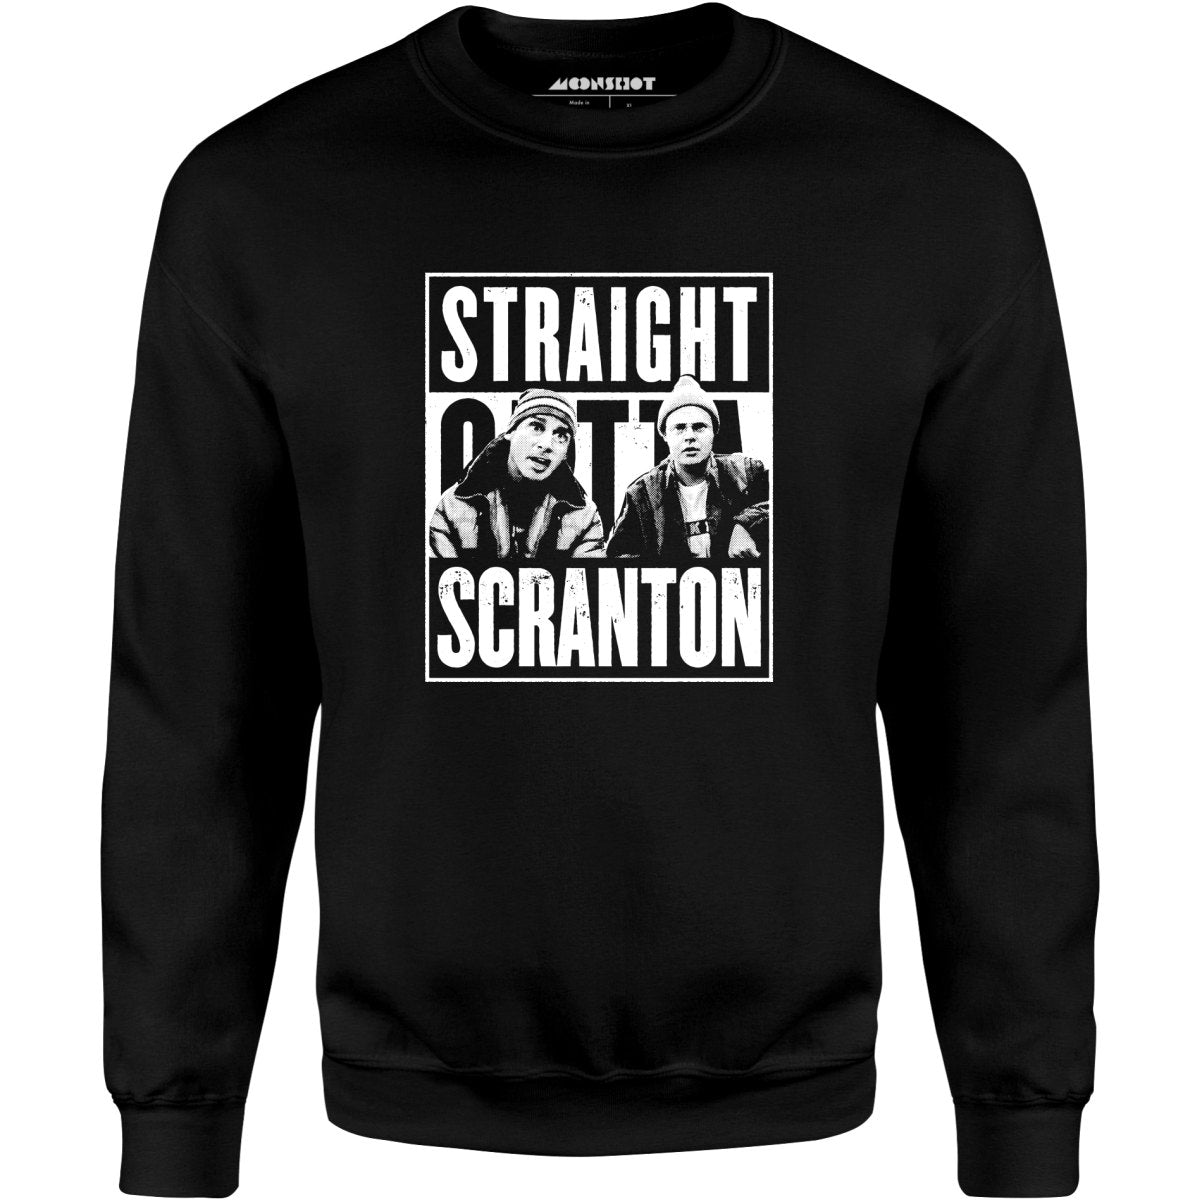 Straight Outta Scranton - Lazy Scranton - Unisex Sweatshirt